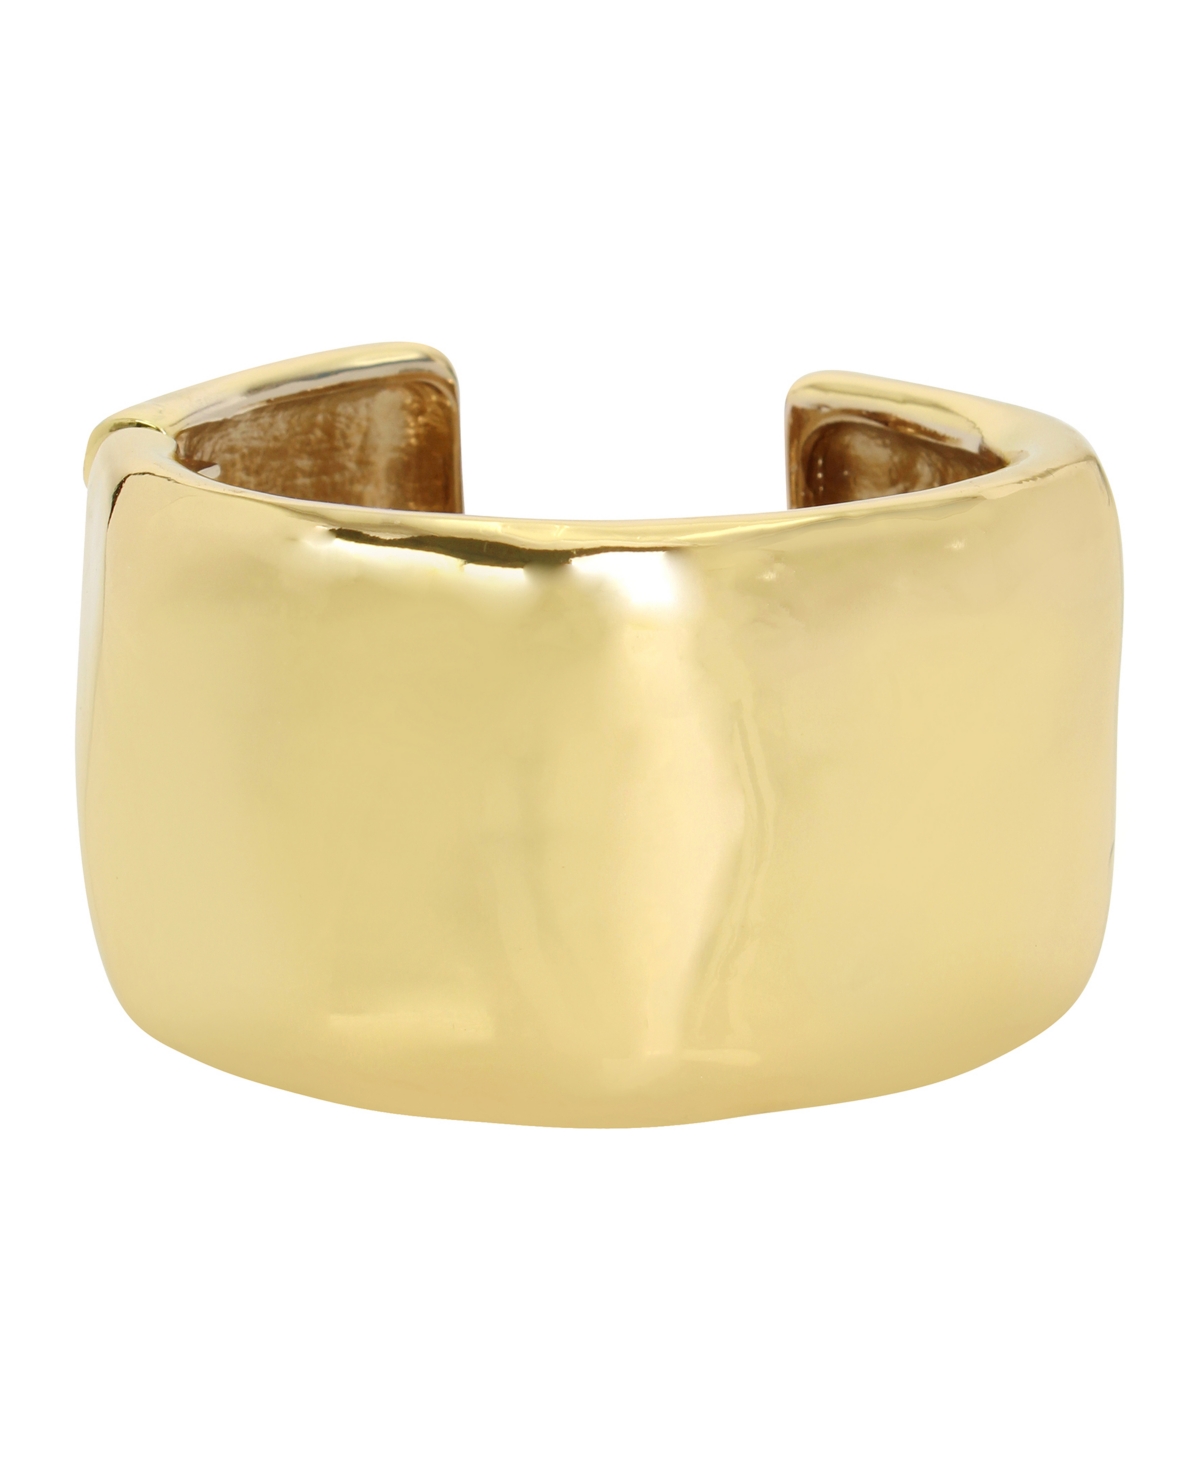 Gold-Tone Sculpted Statement Bangle Bracelet - Gold